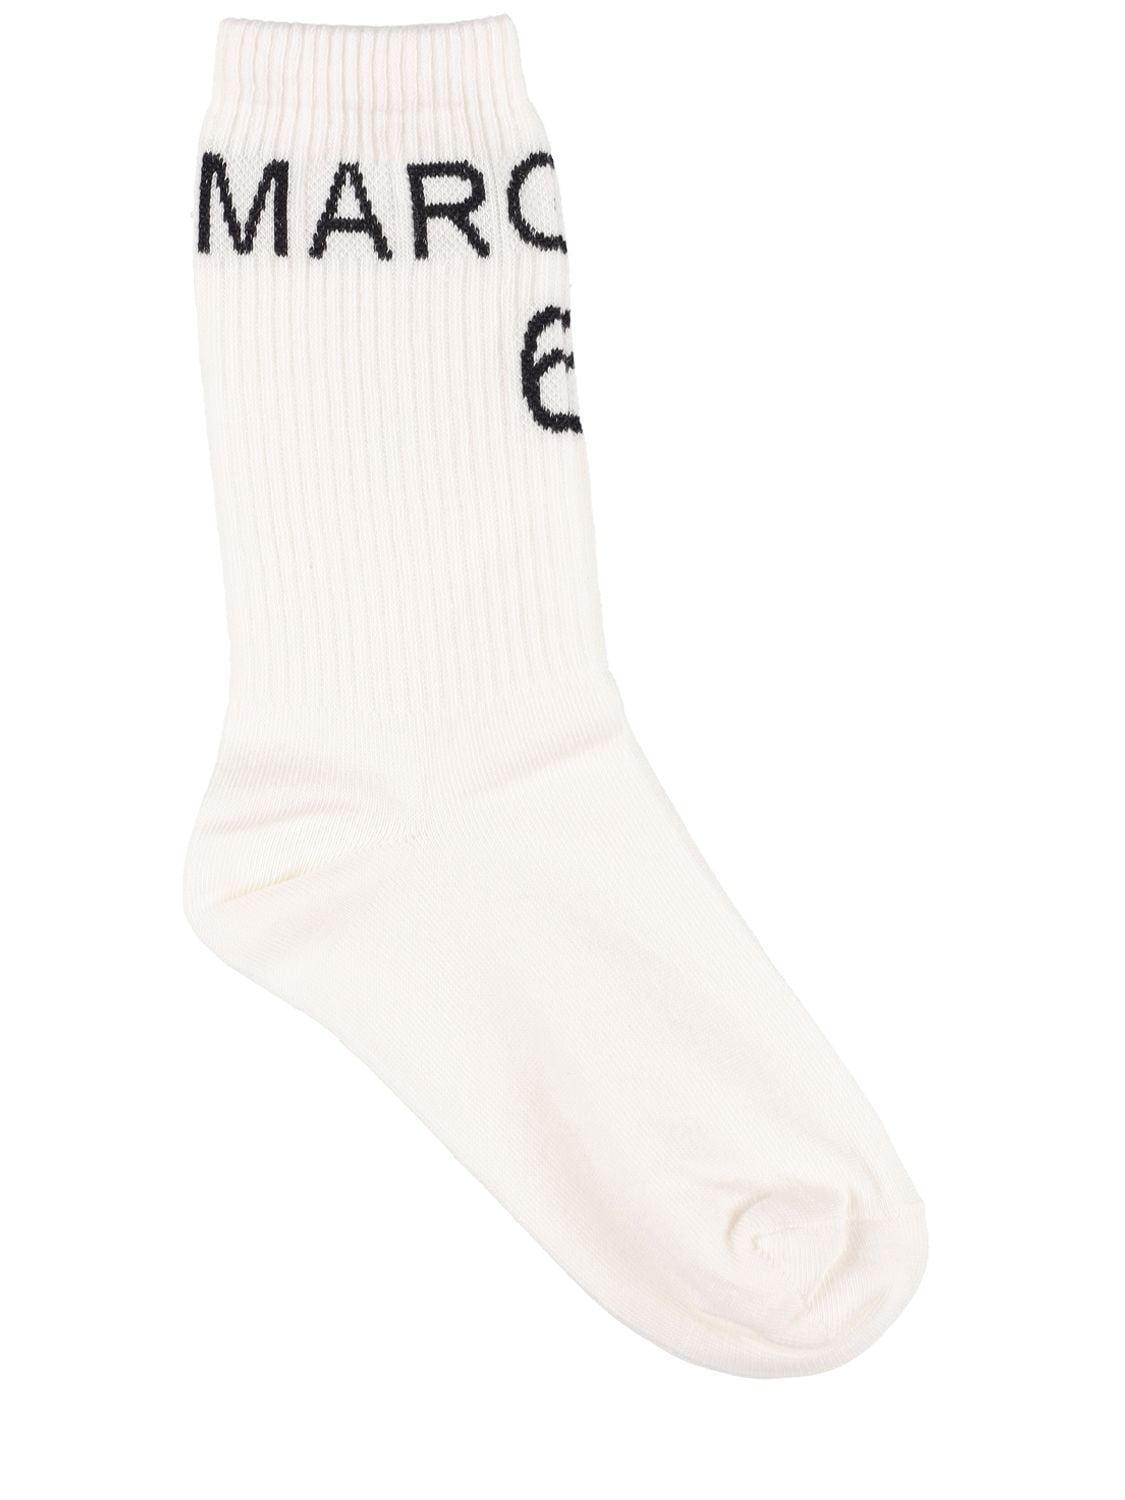 MM6 MAISON MARGIELA Logo Stretch Cotton Socks